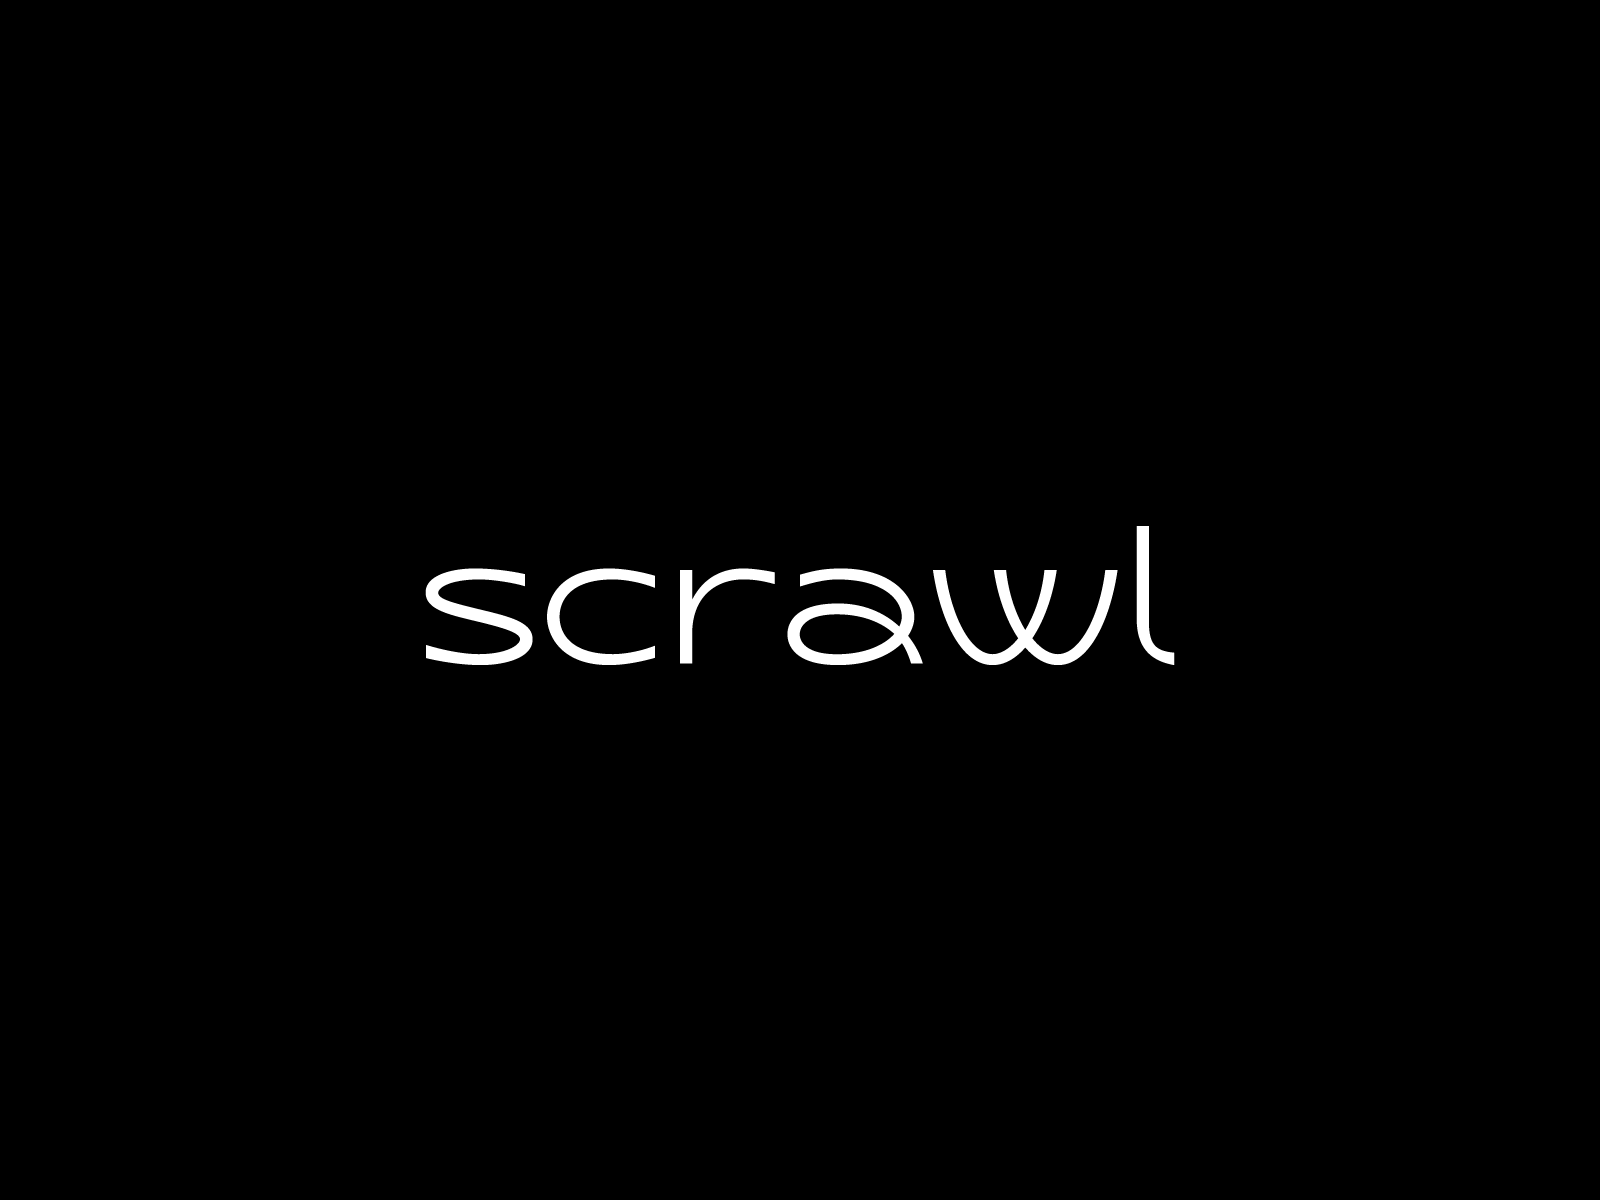 Scrawl by VORONOI on Dribbble